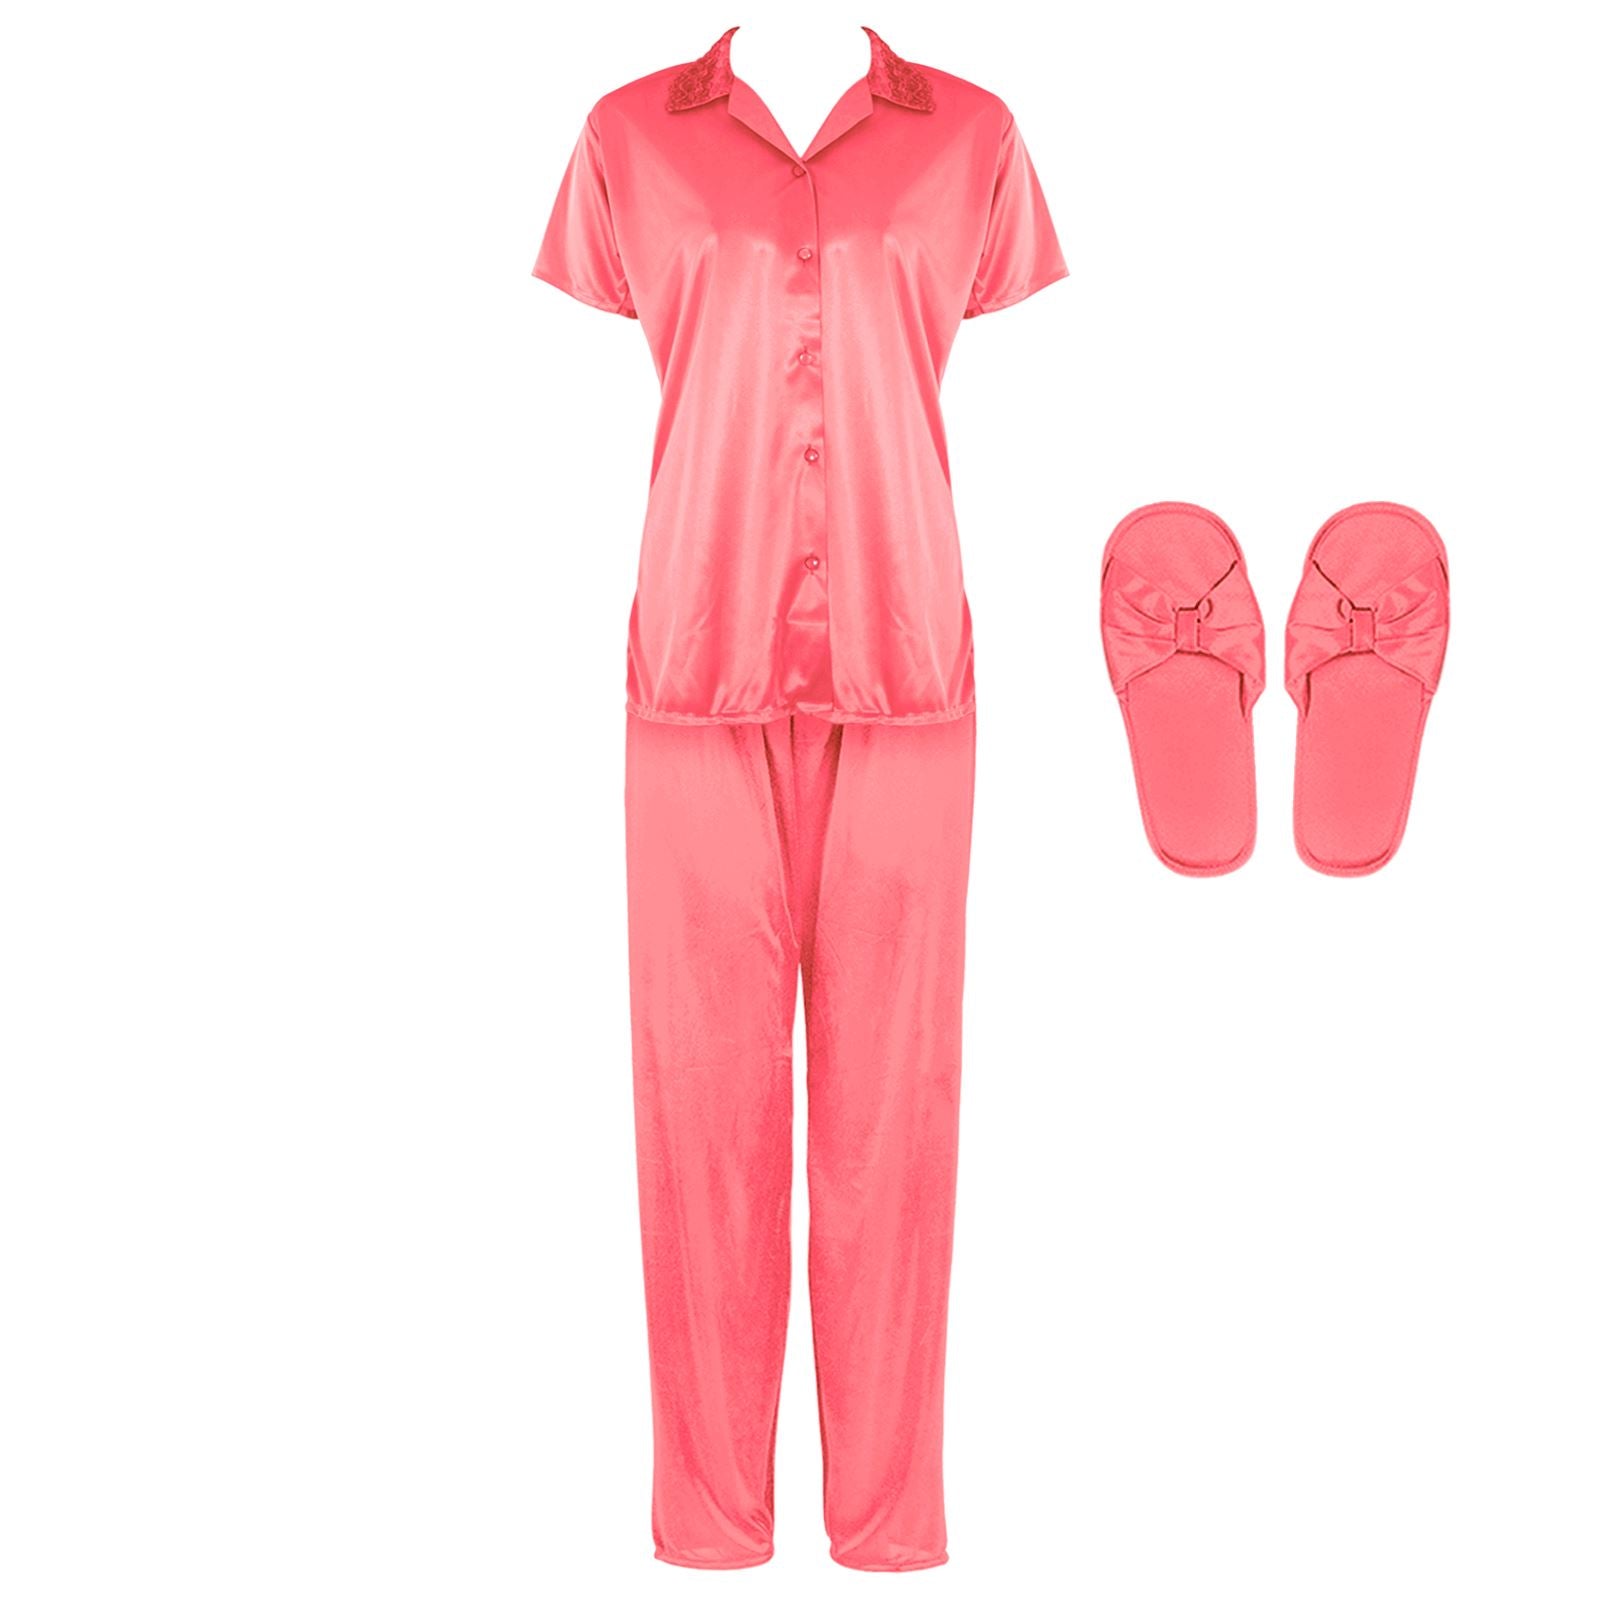 Baby Pink / One Size Satin Pyjama Set With Bedroom Sleepers The Orange Tags